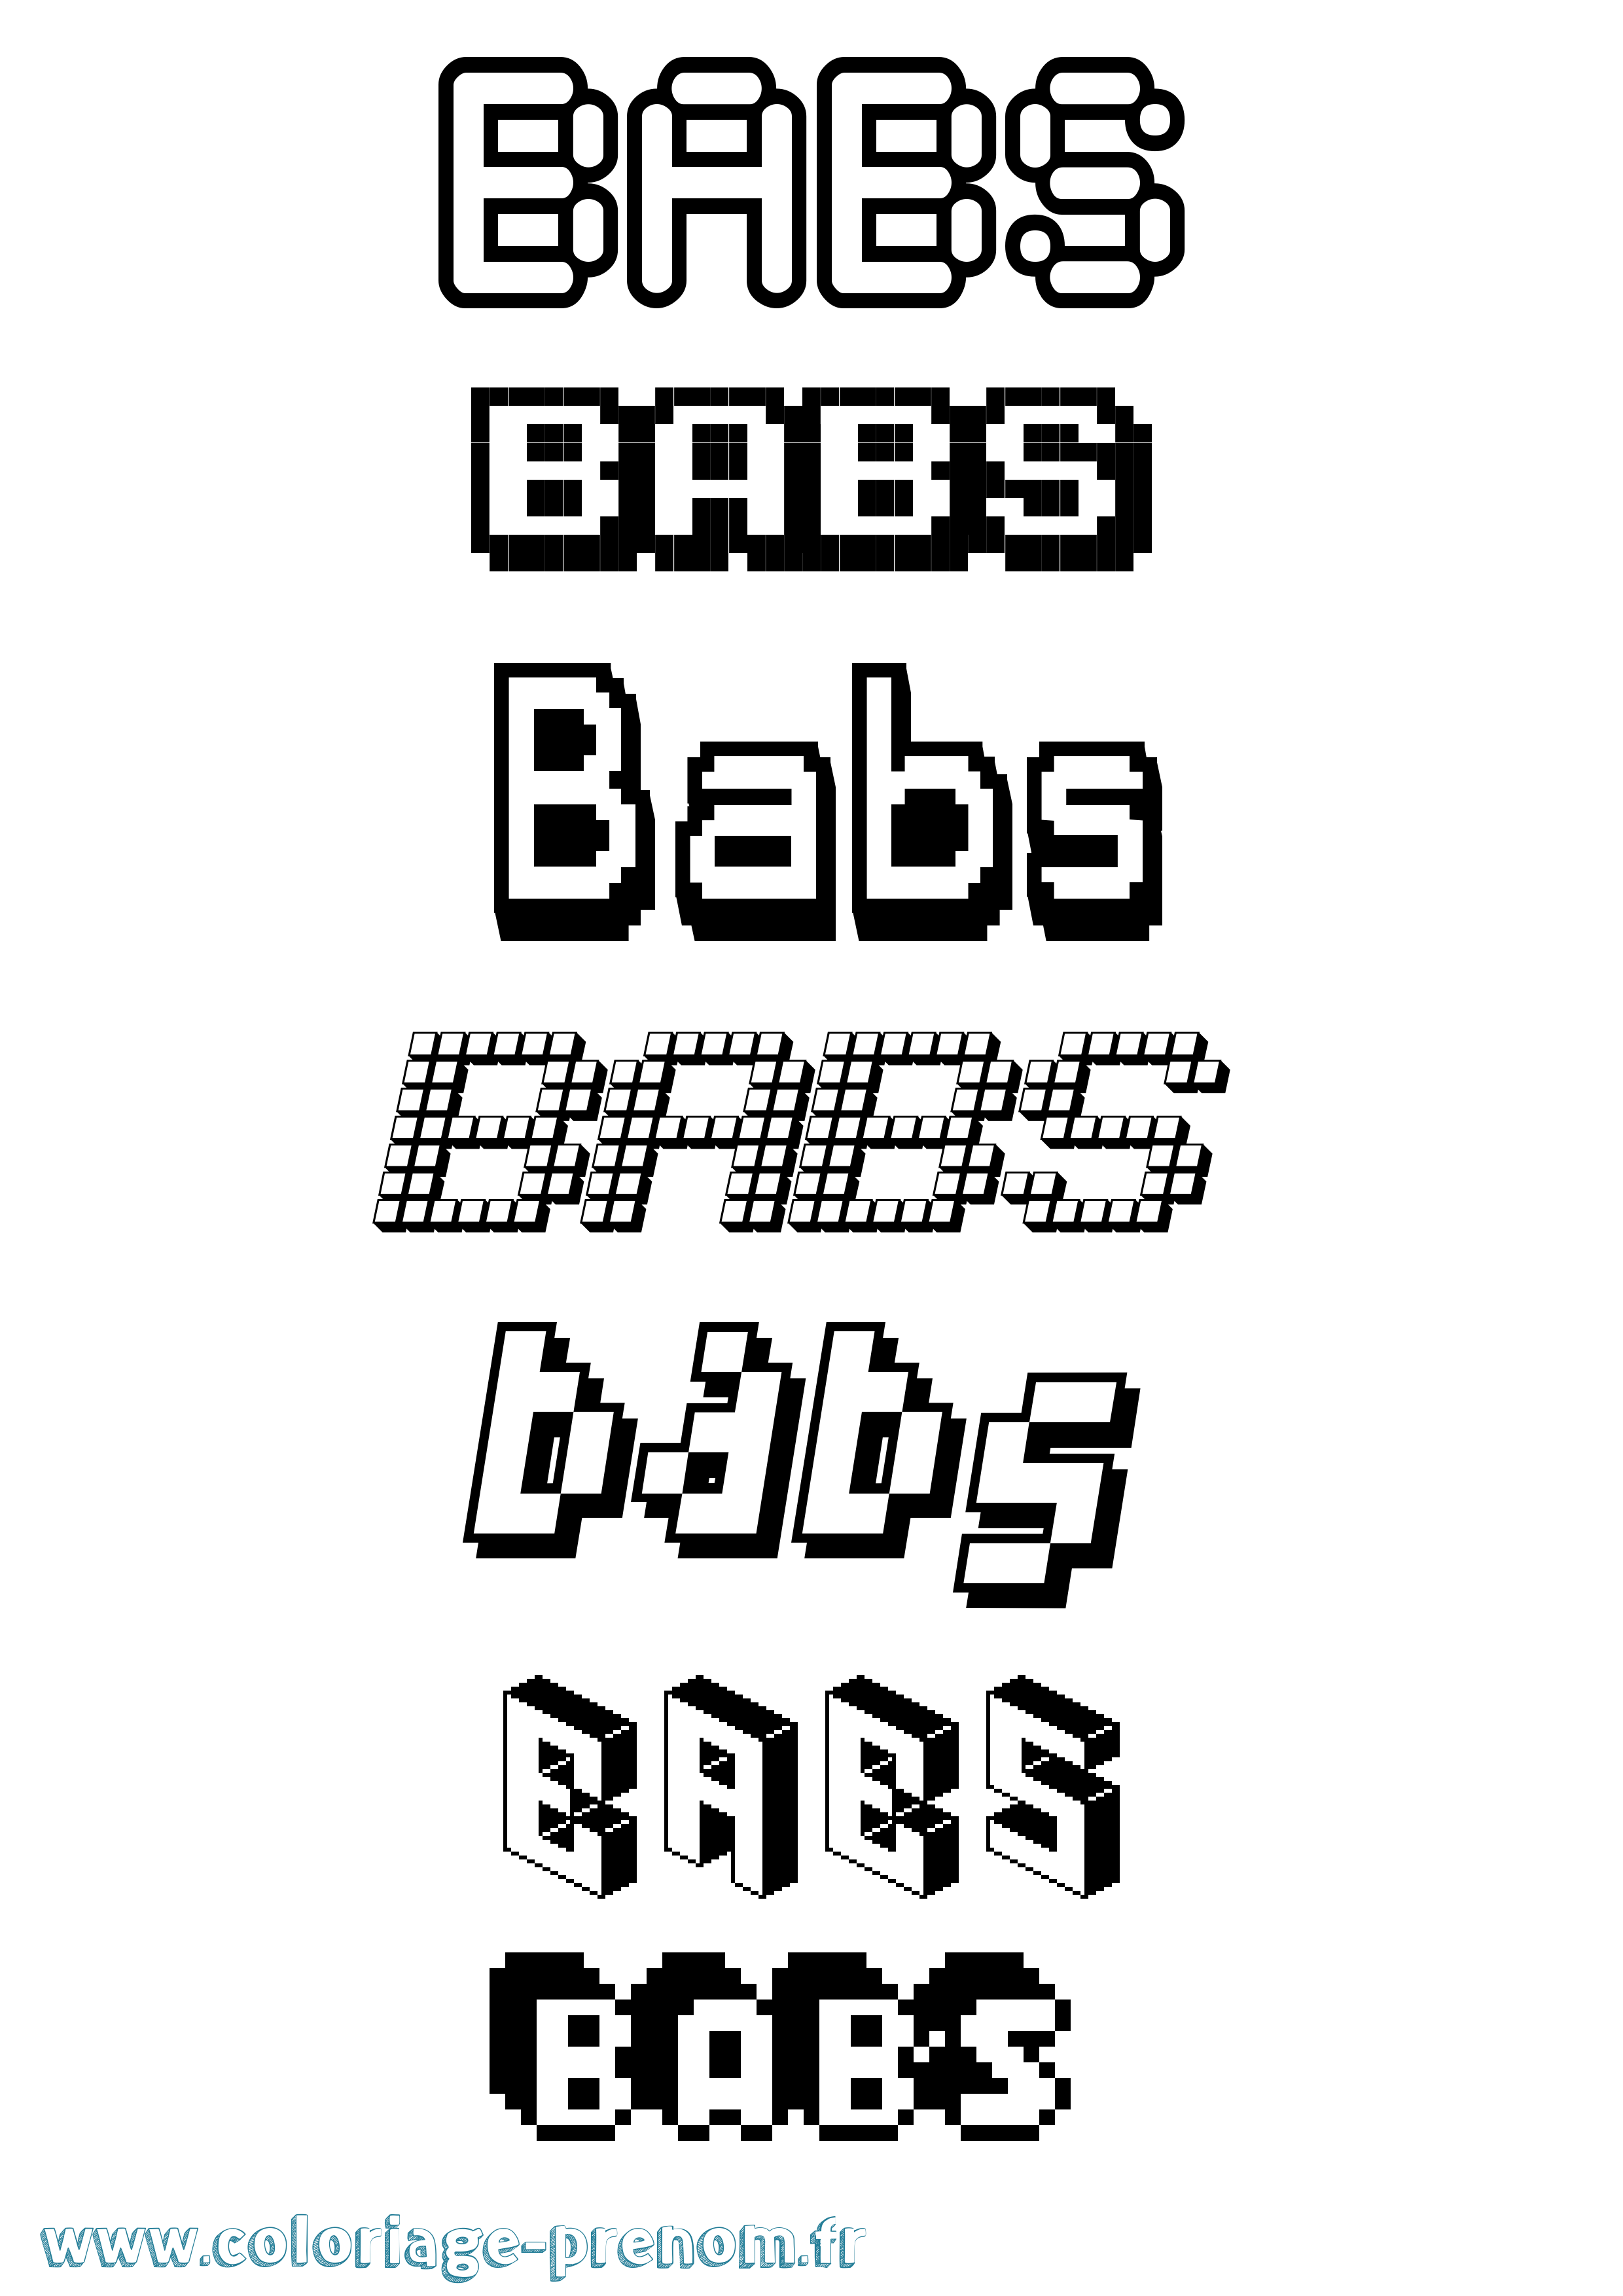 Coloriage prénom Babs Pixel